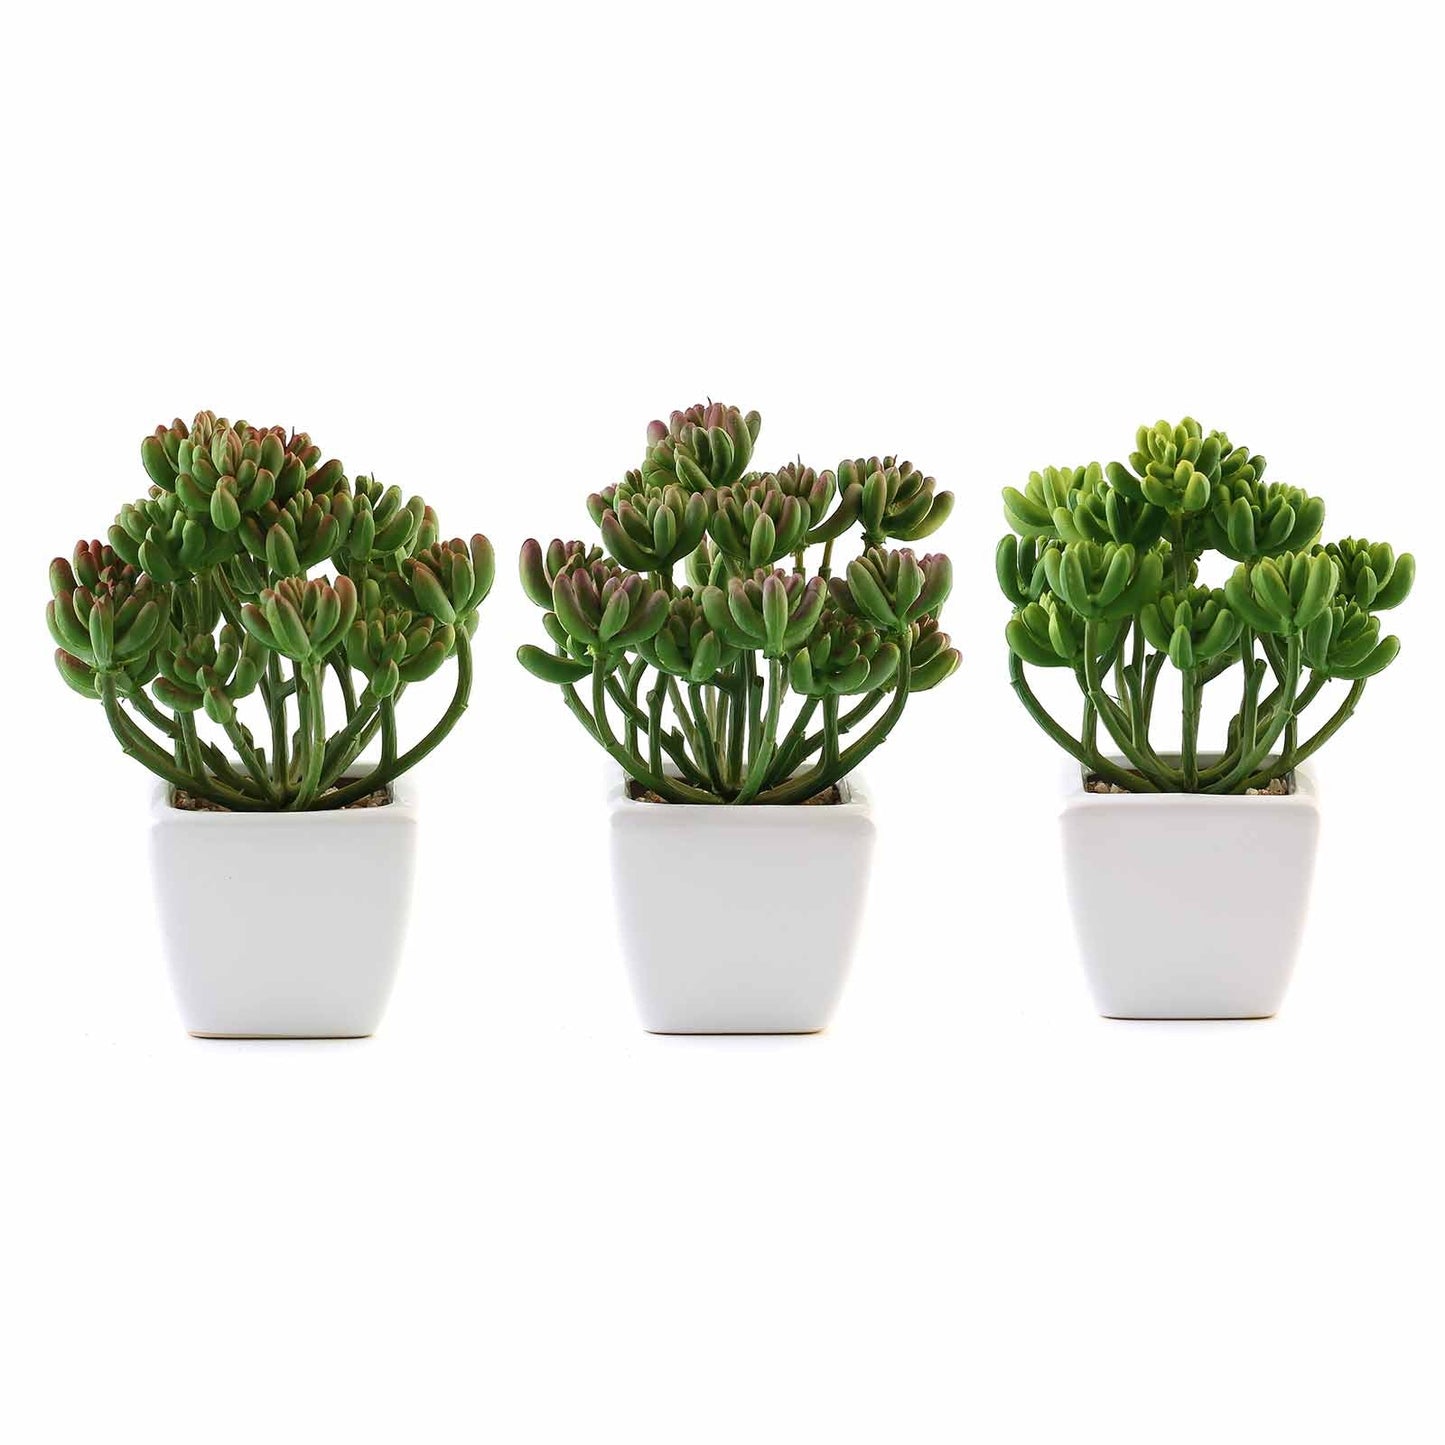 3 Pack Ceramic Planter Pot and Artificial Stonecrop Succulent Plant 7"